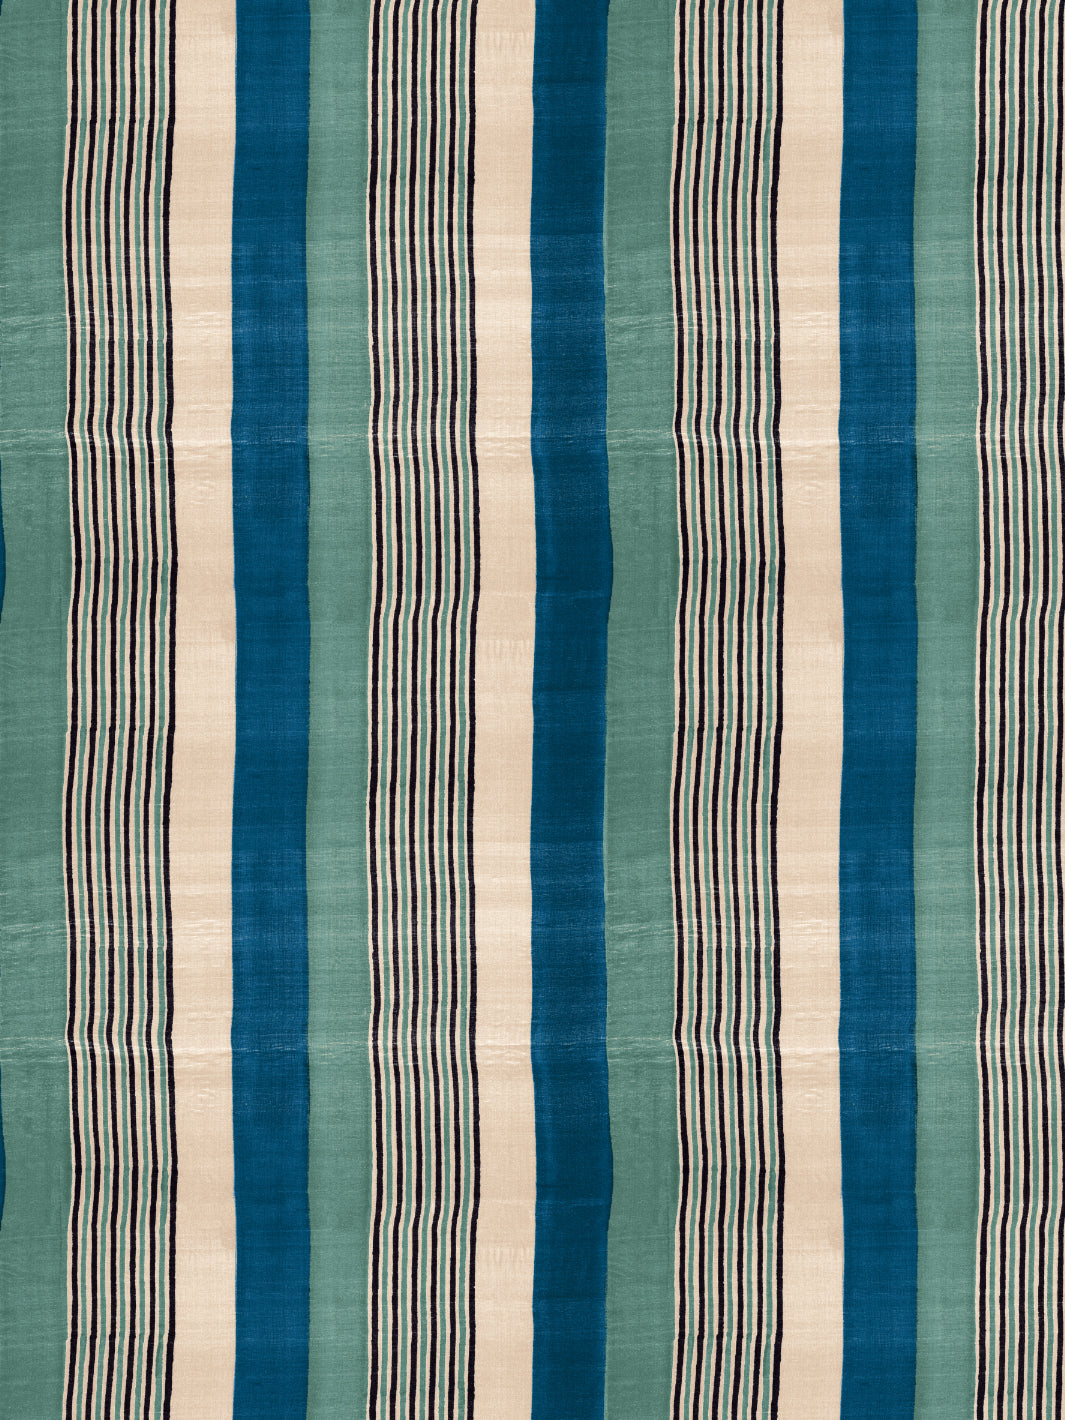 'Tent Stripe Small' Wallpaper by Chris Benz - Seaglass Blue